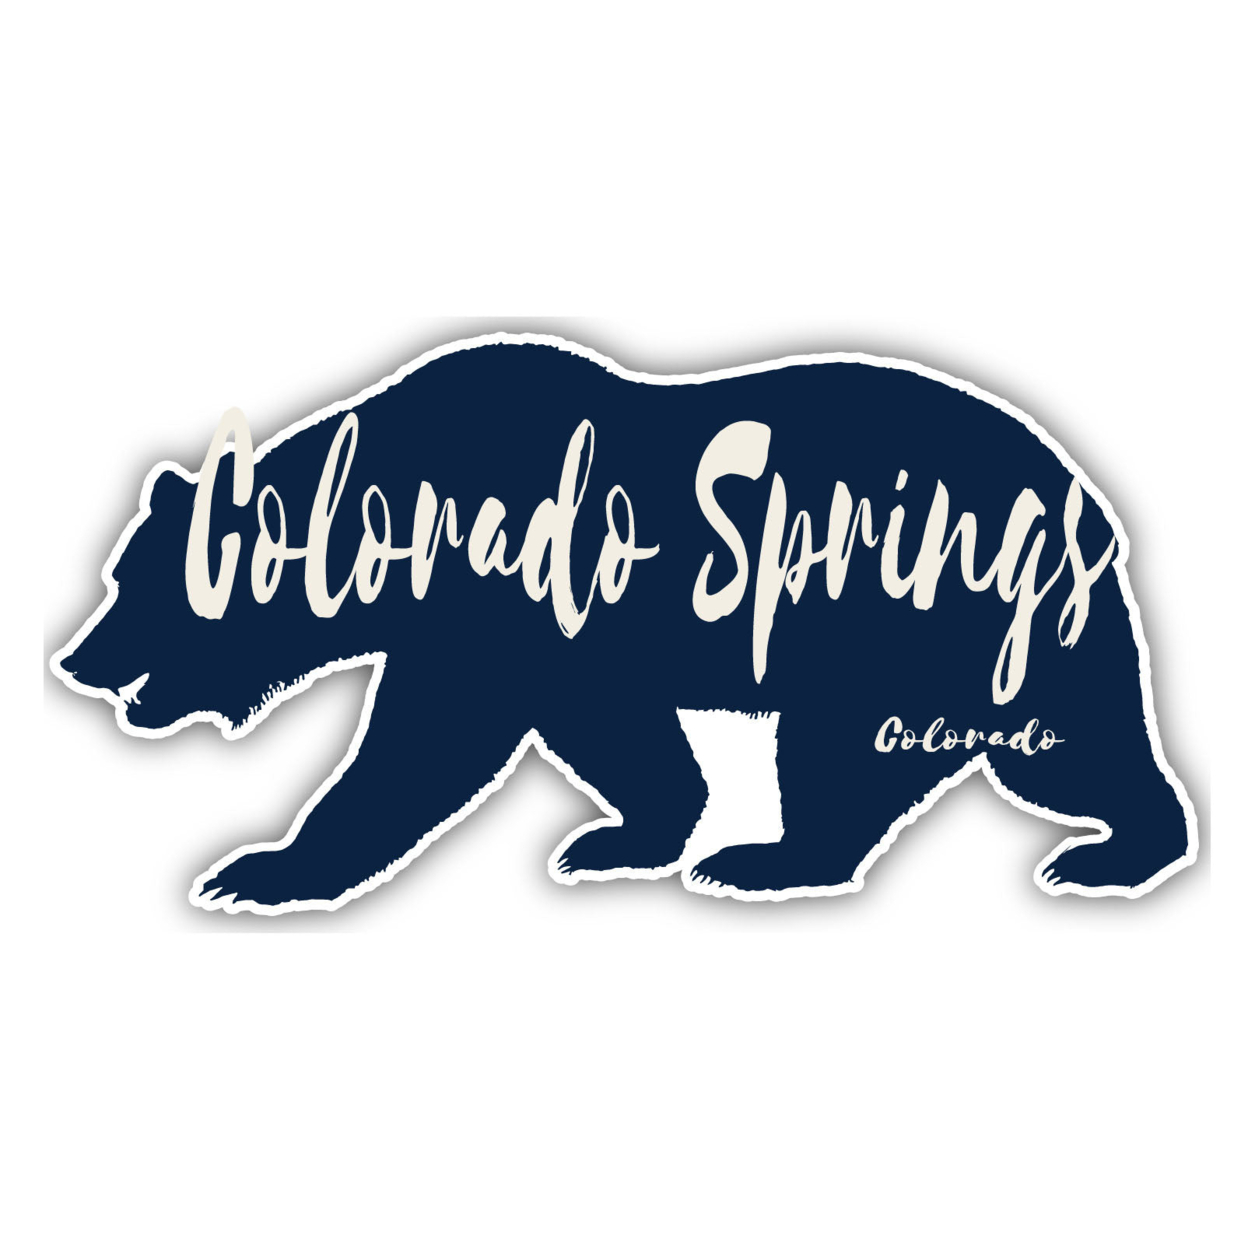 Colorado Springs Colorado Souvenir Decorative Stickers (Choose Theme And Size) - 4-Pack, 6-Inch, Adventures Awaits